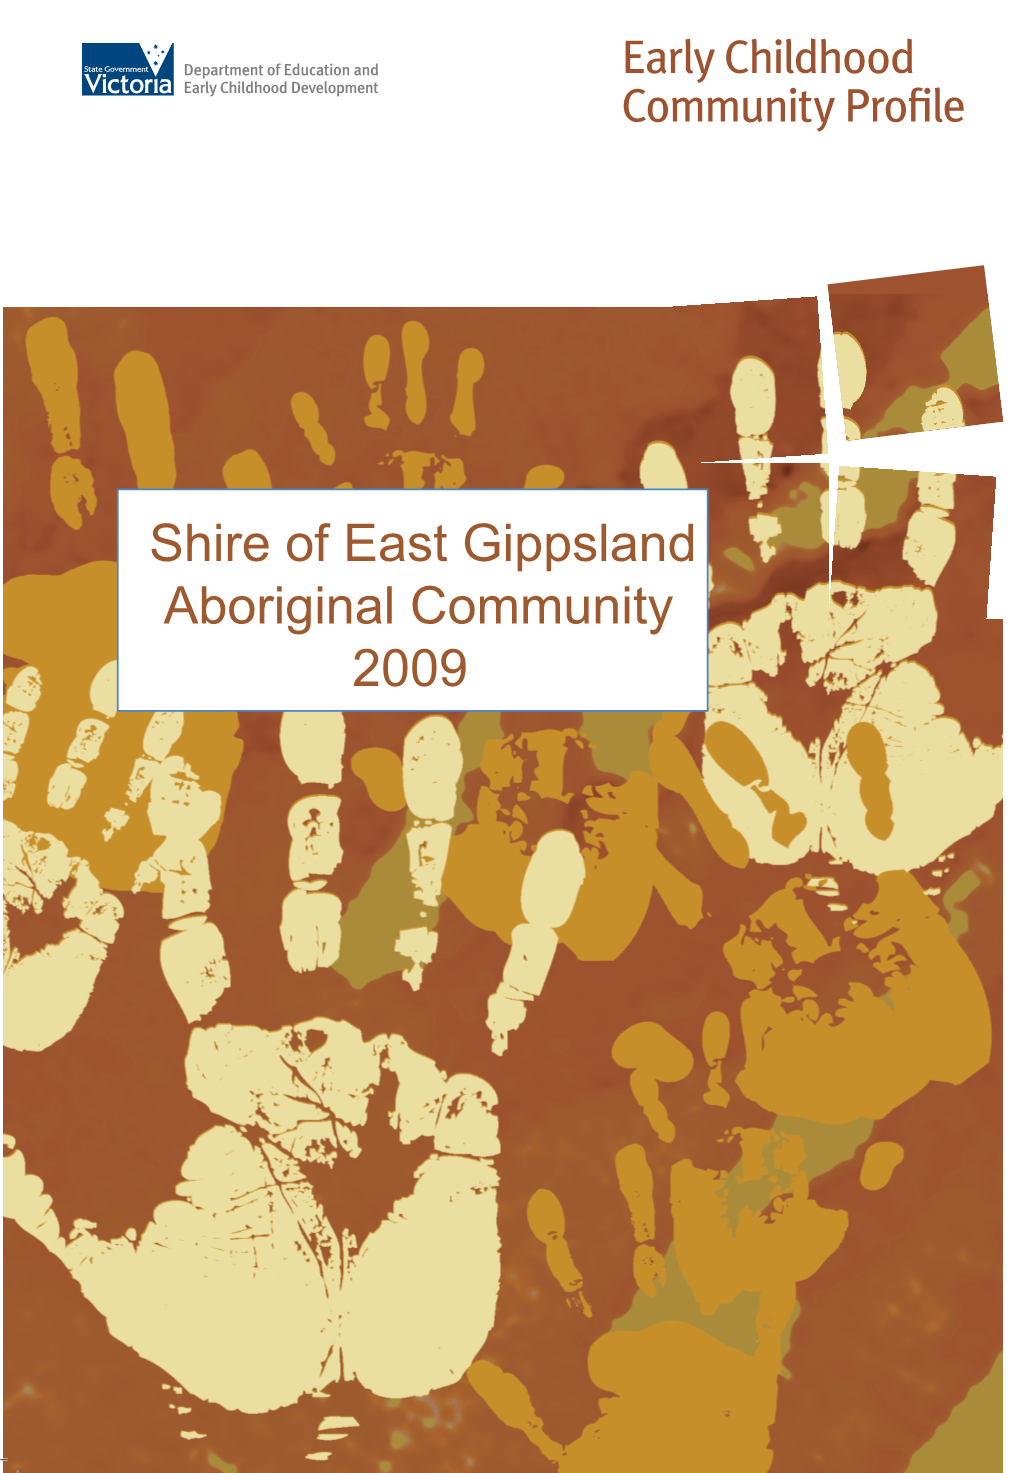 Shire of East Gippsland Aboriginal Community 2009 Early Childhood Community Profile